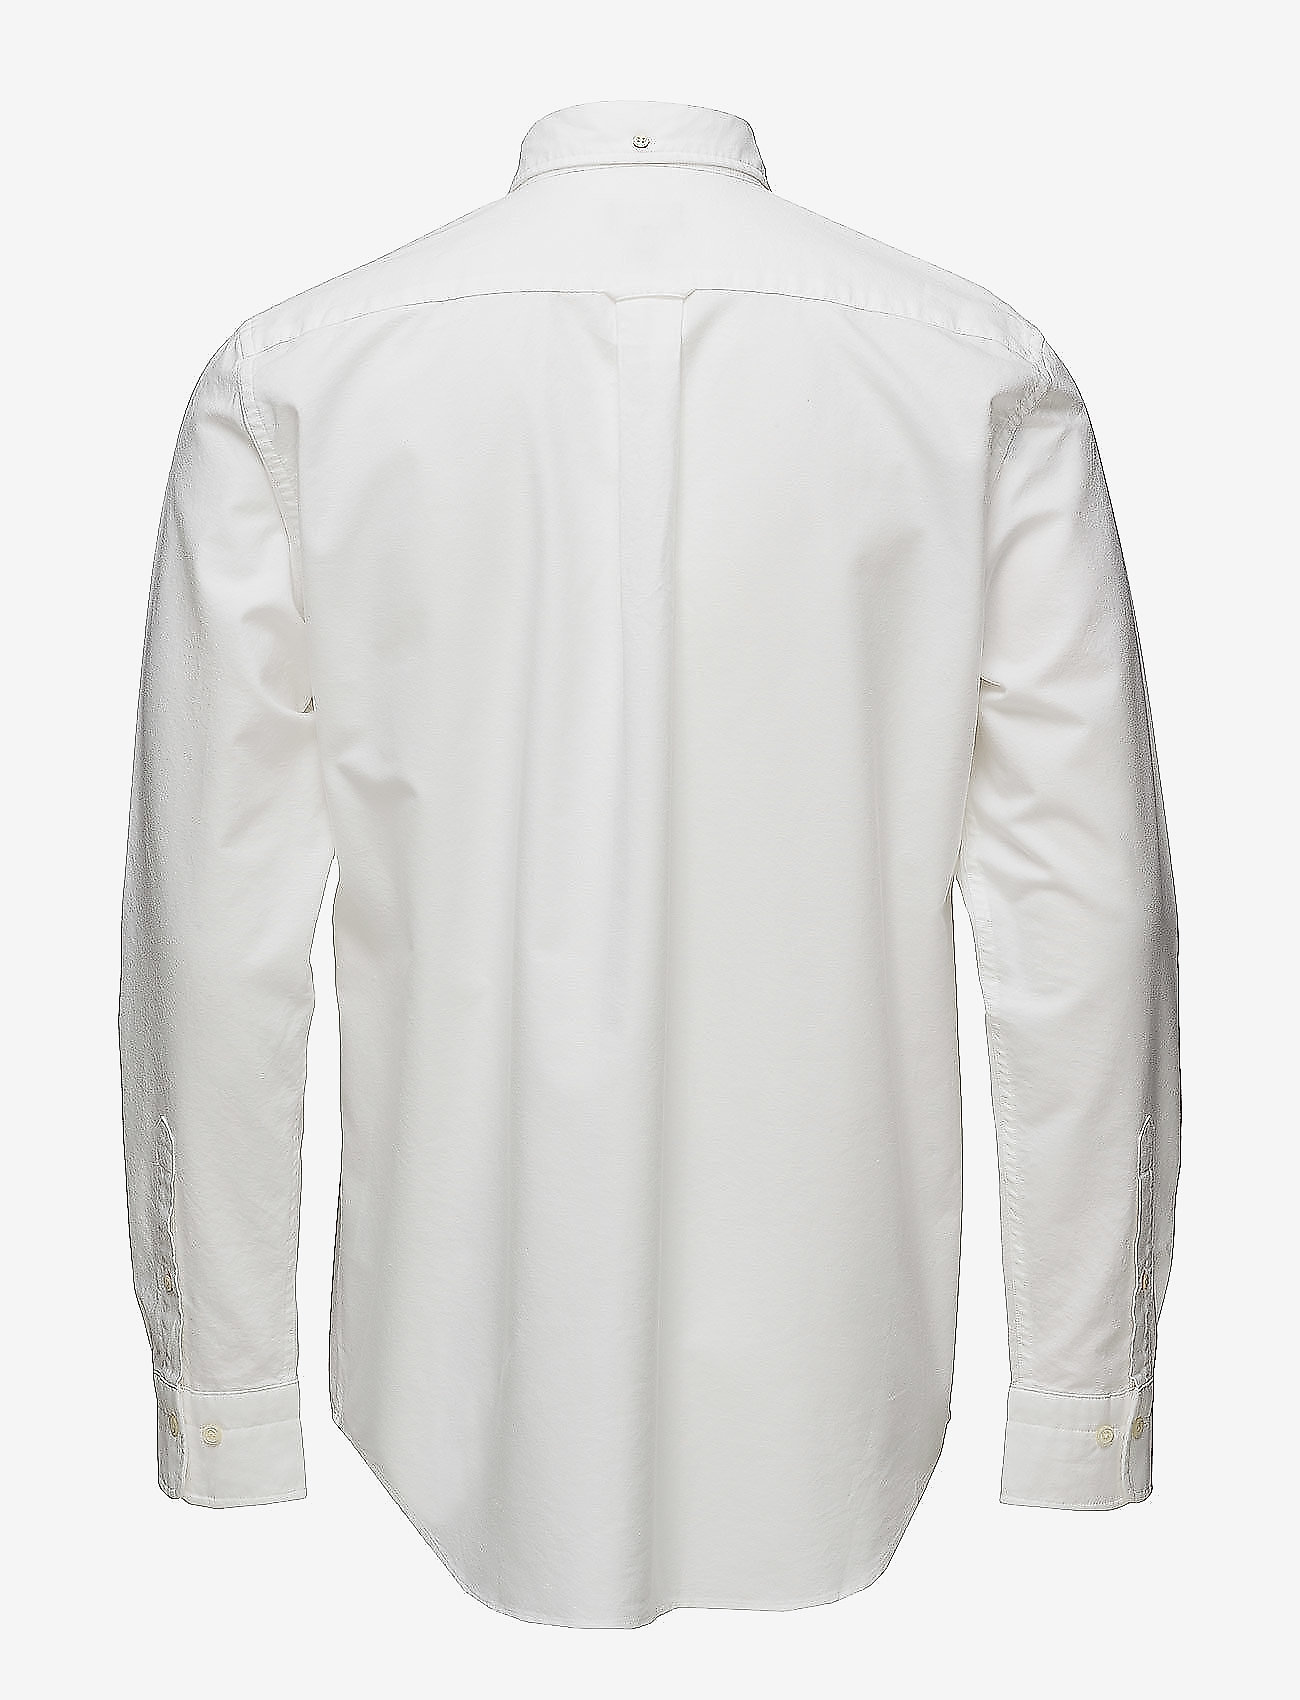 GANT - REG OXFORD SHIRT BD - oxford-skjortor - white - 1